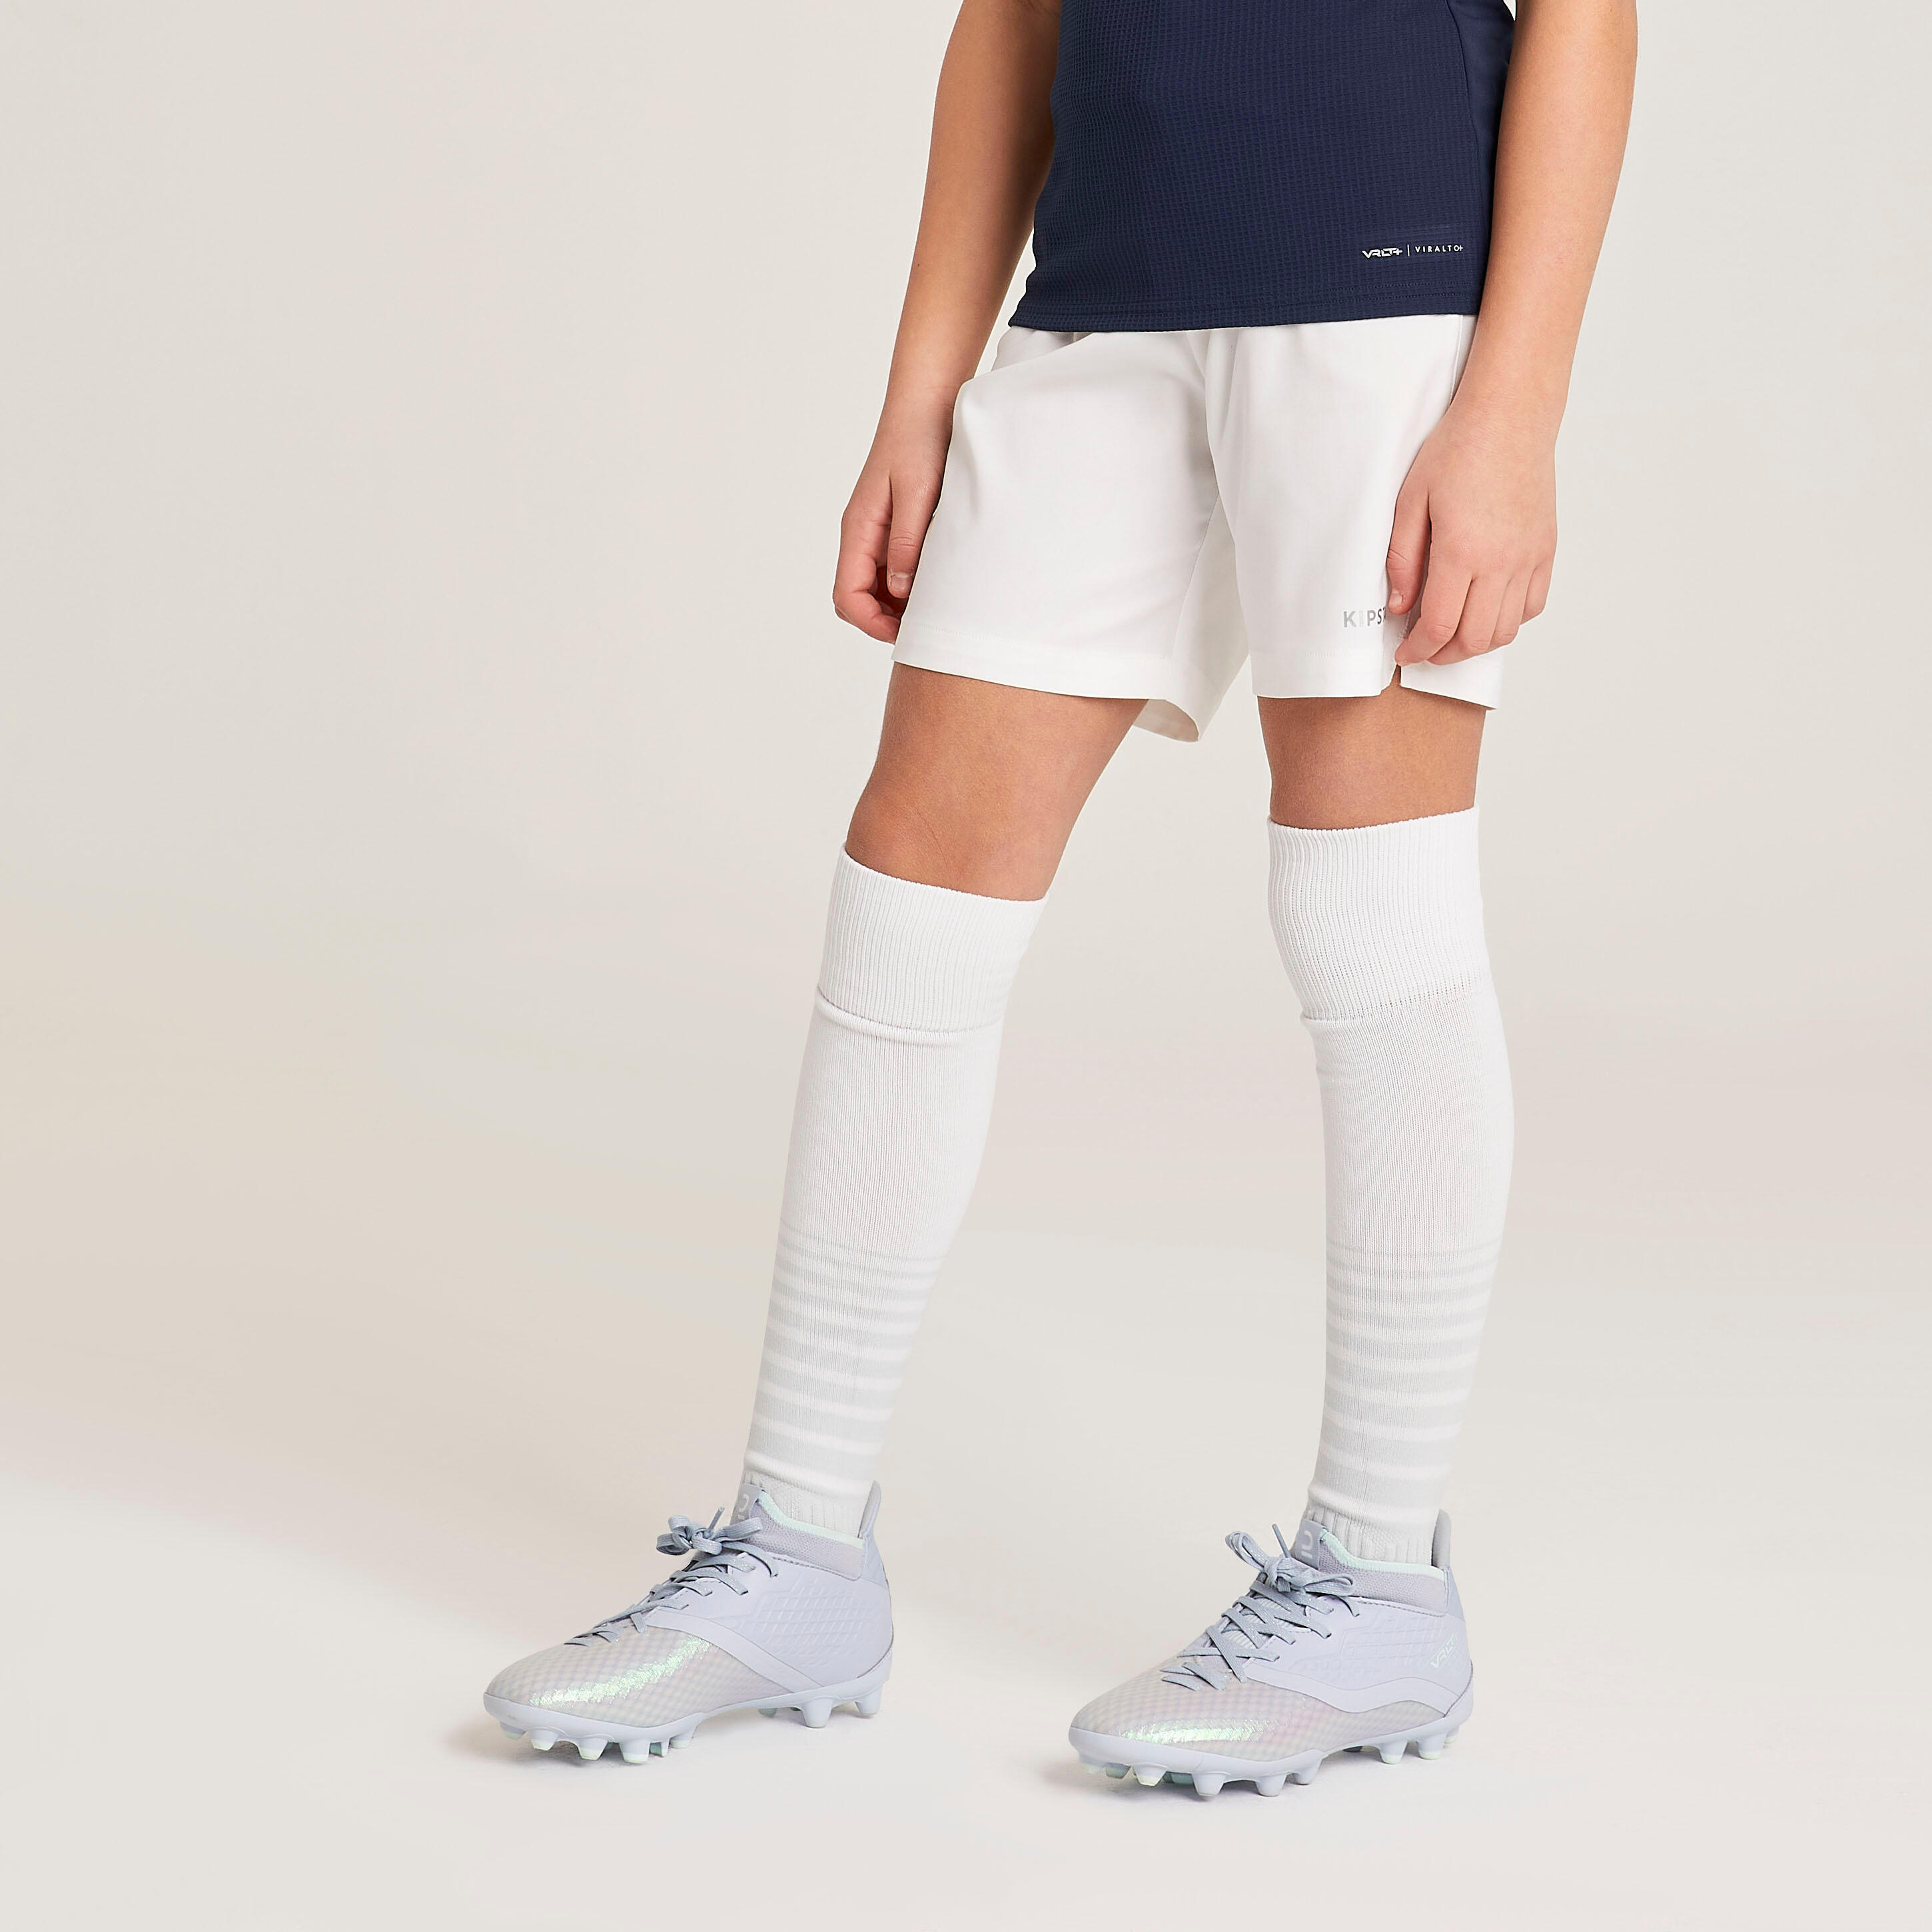 Girls' Football Shorts  - White 2/21